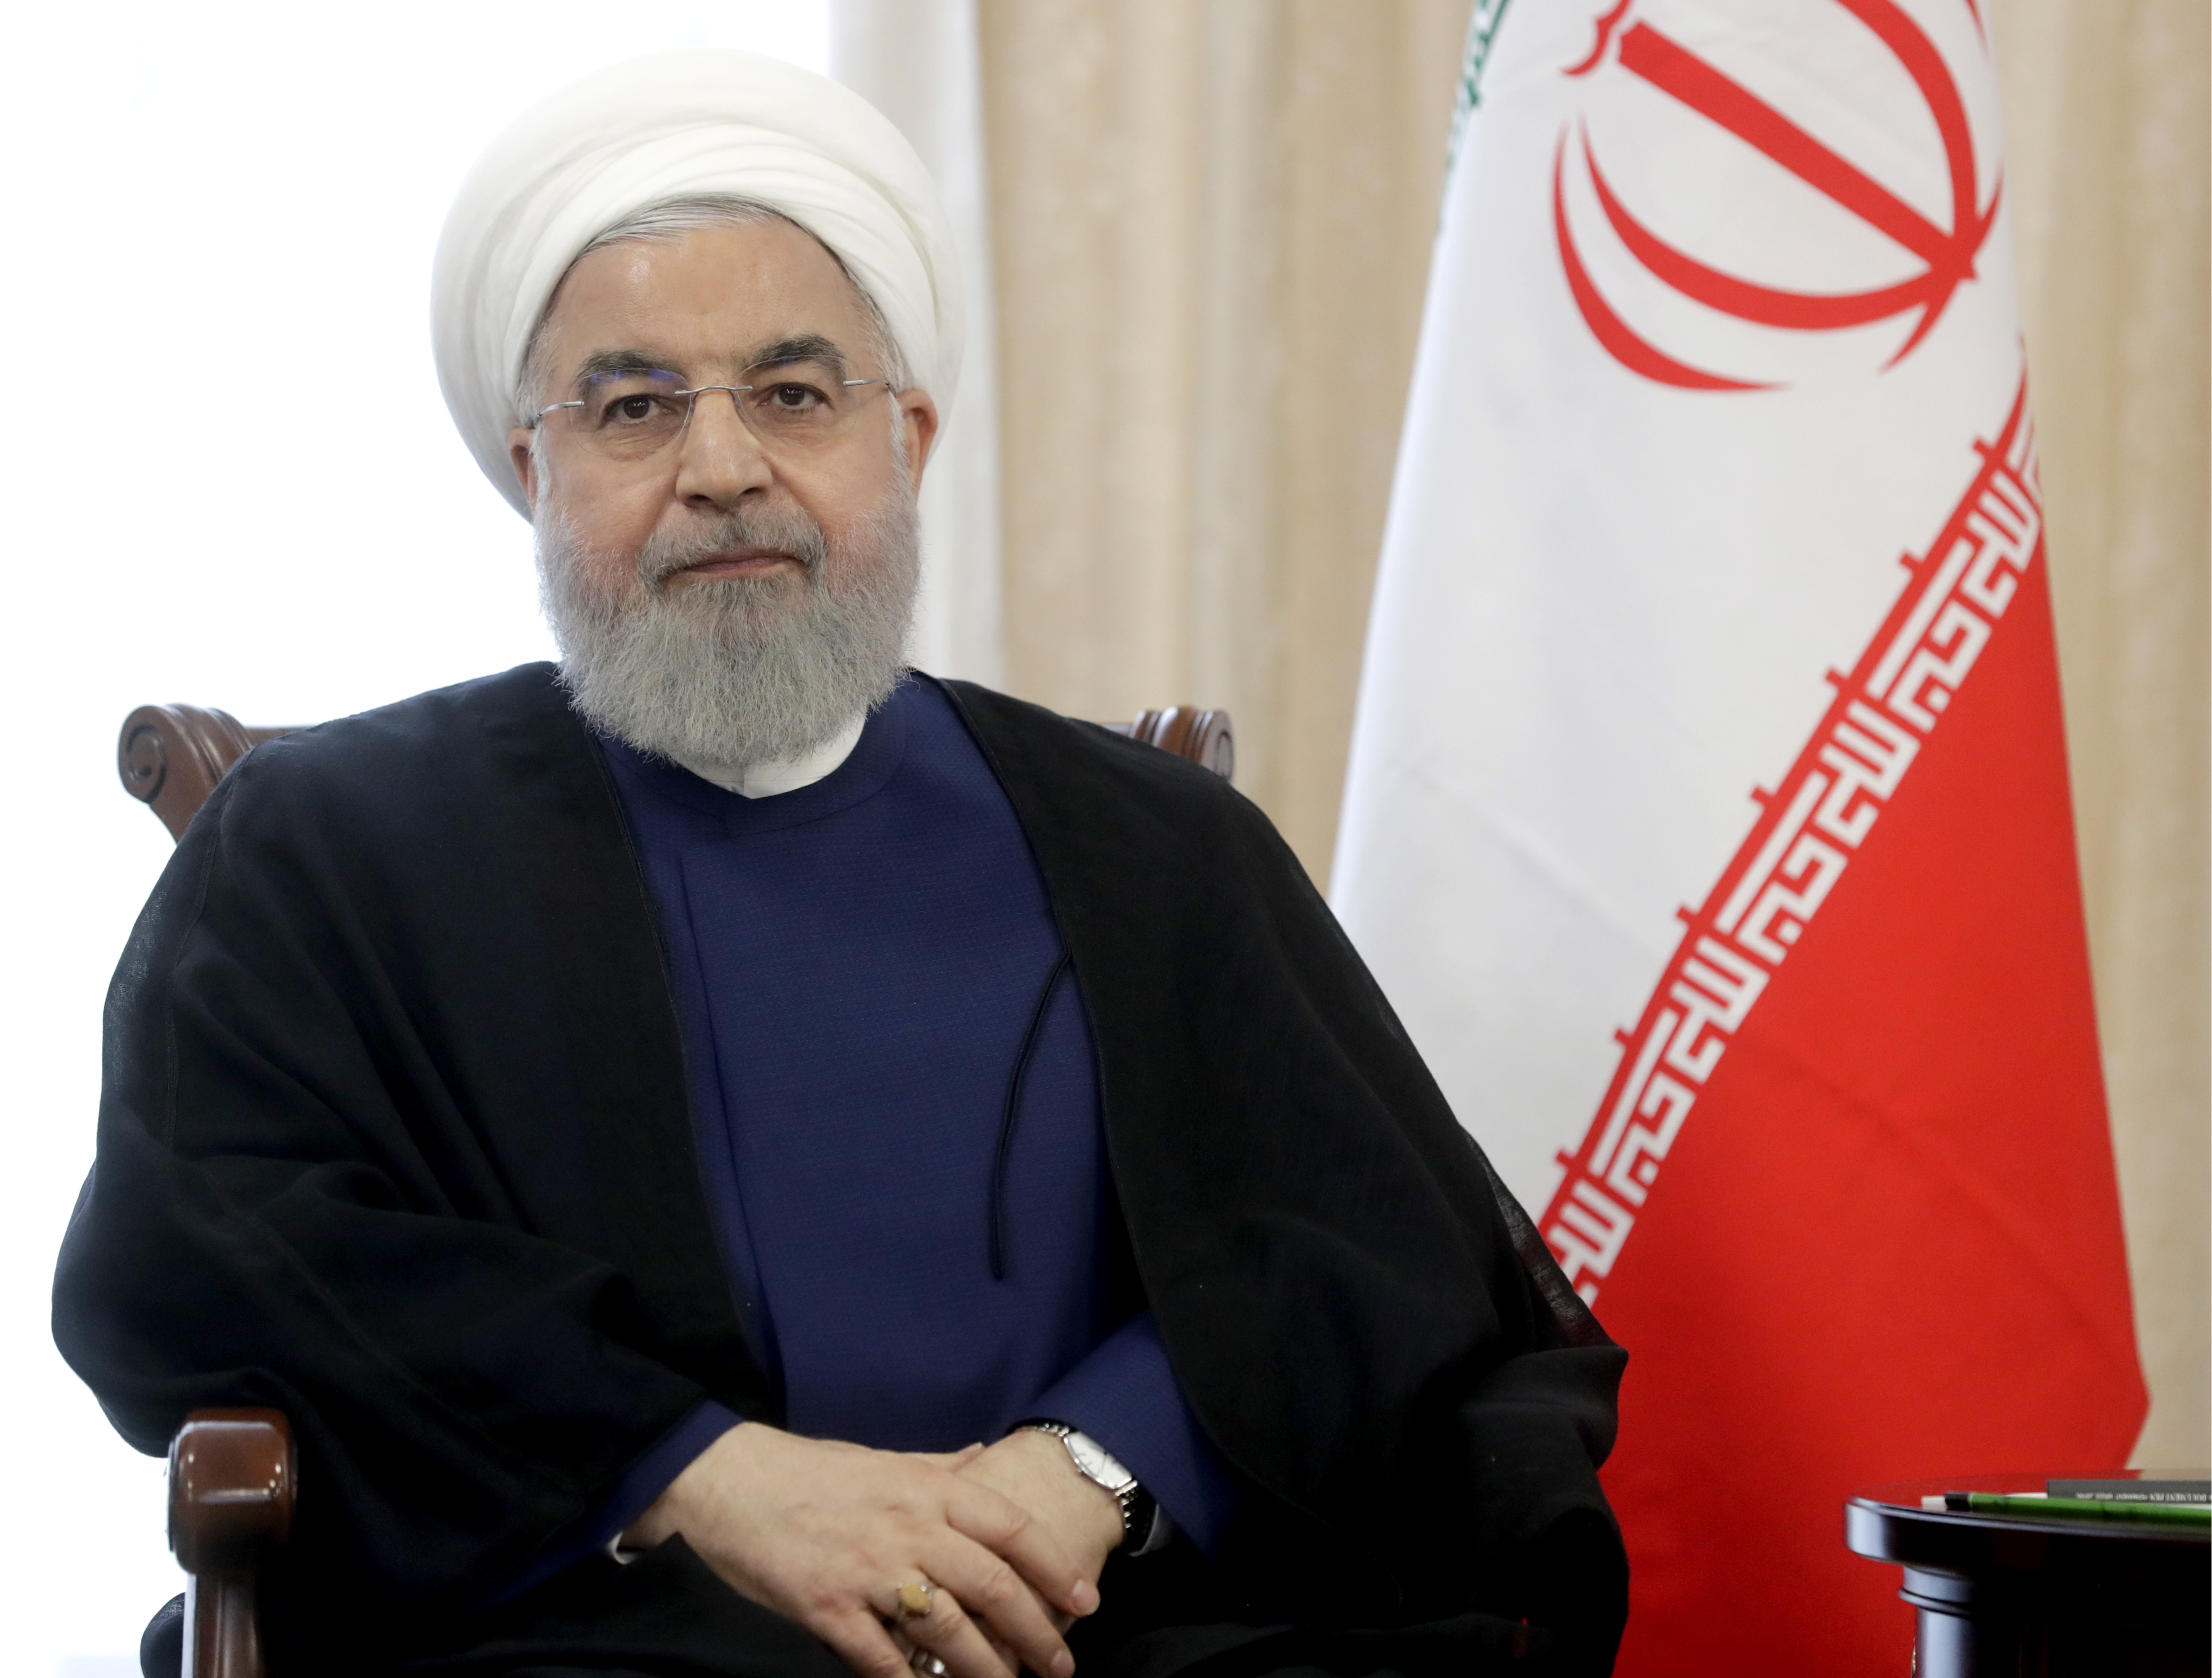 Iran’s President Hassan Rouhani sitting beside an Iranian flag.